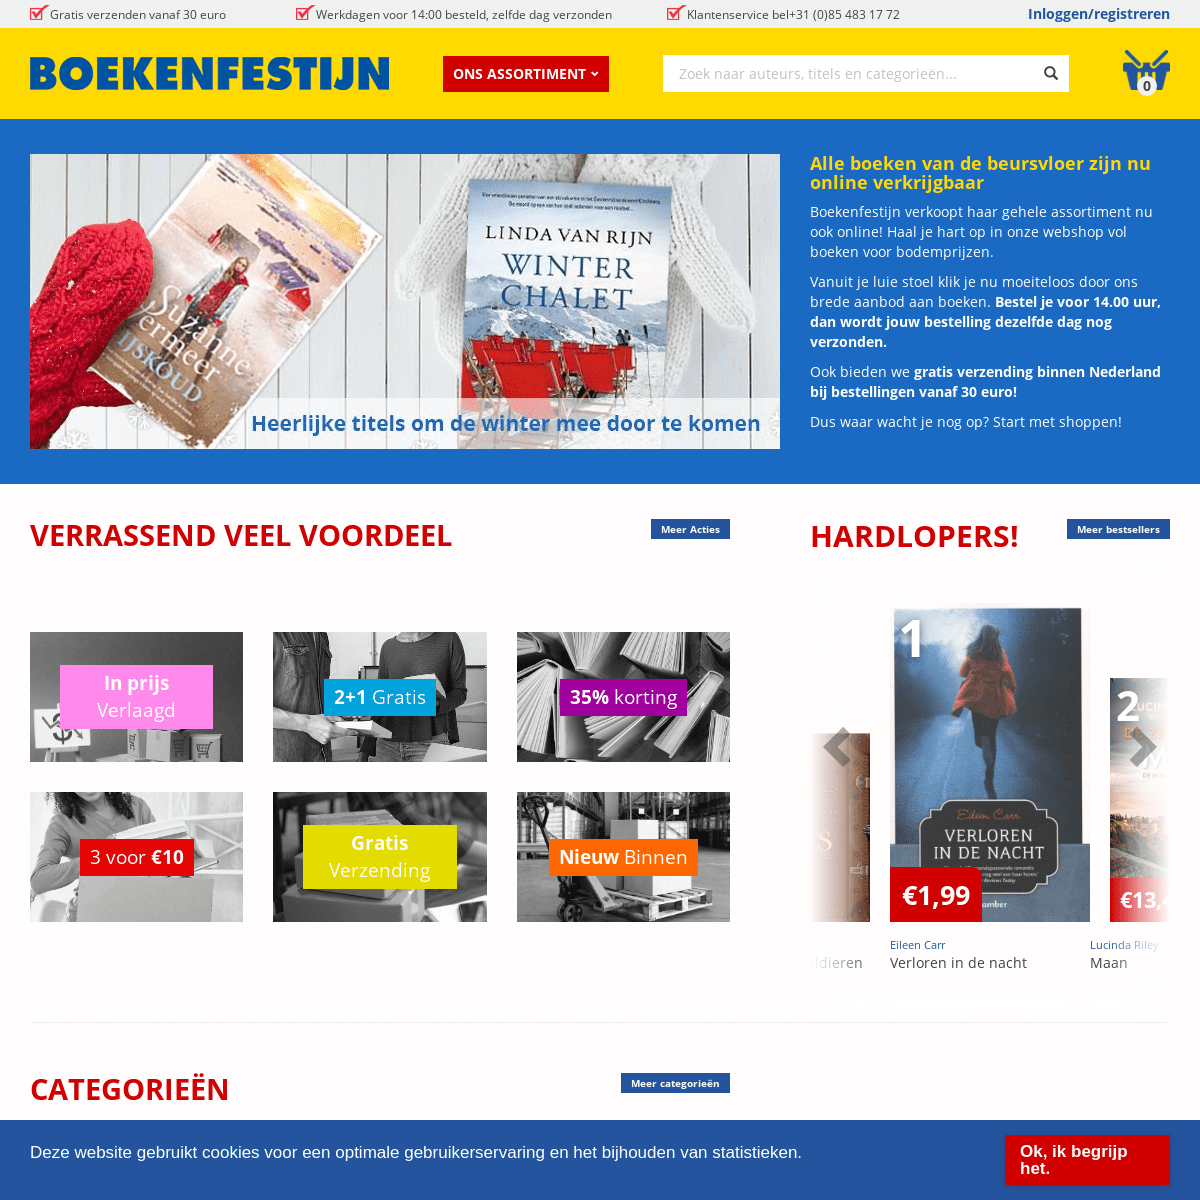 A complete backup of boekenfestijn.com